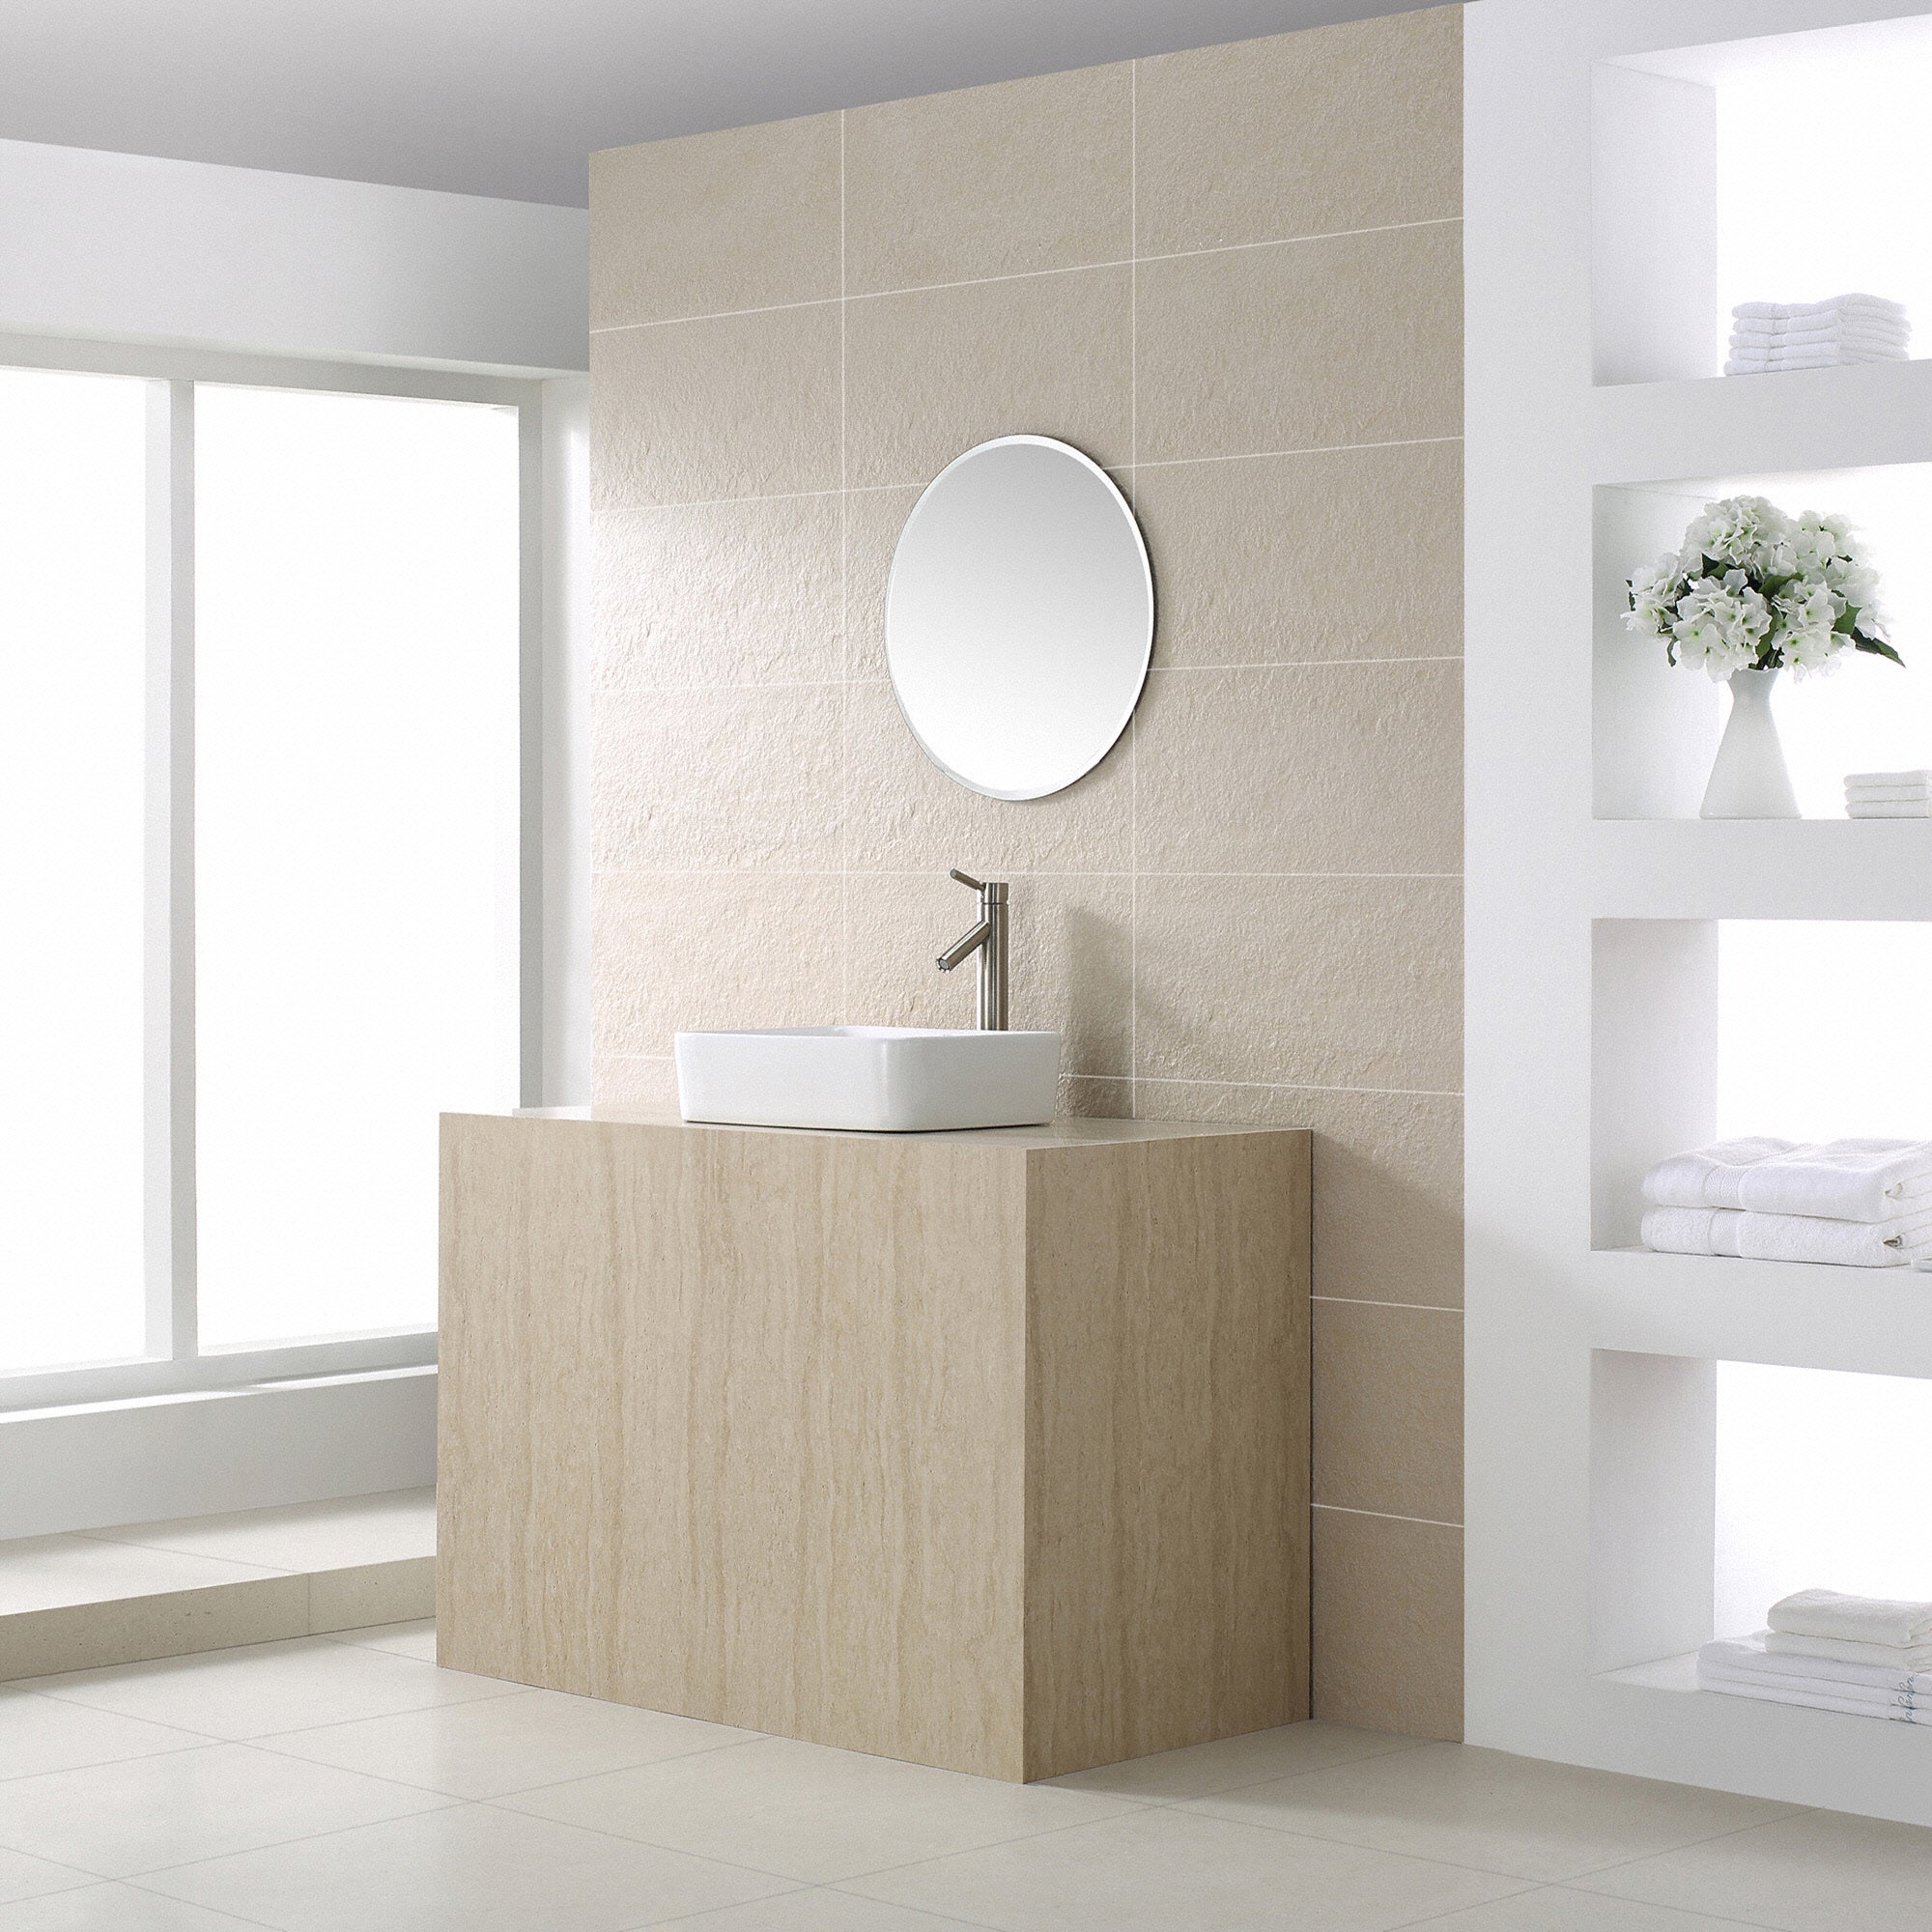 KRAUS Rectangular Ceramic Vessel Bathroom Sink in White-Bathroom Sinks-DirectSinks